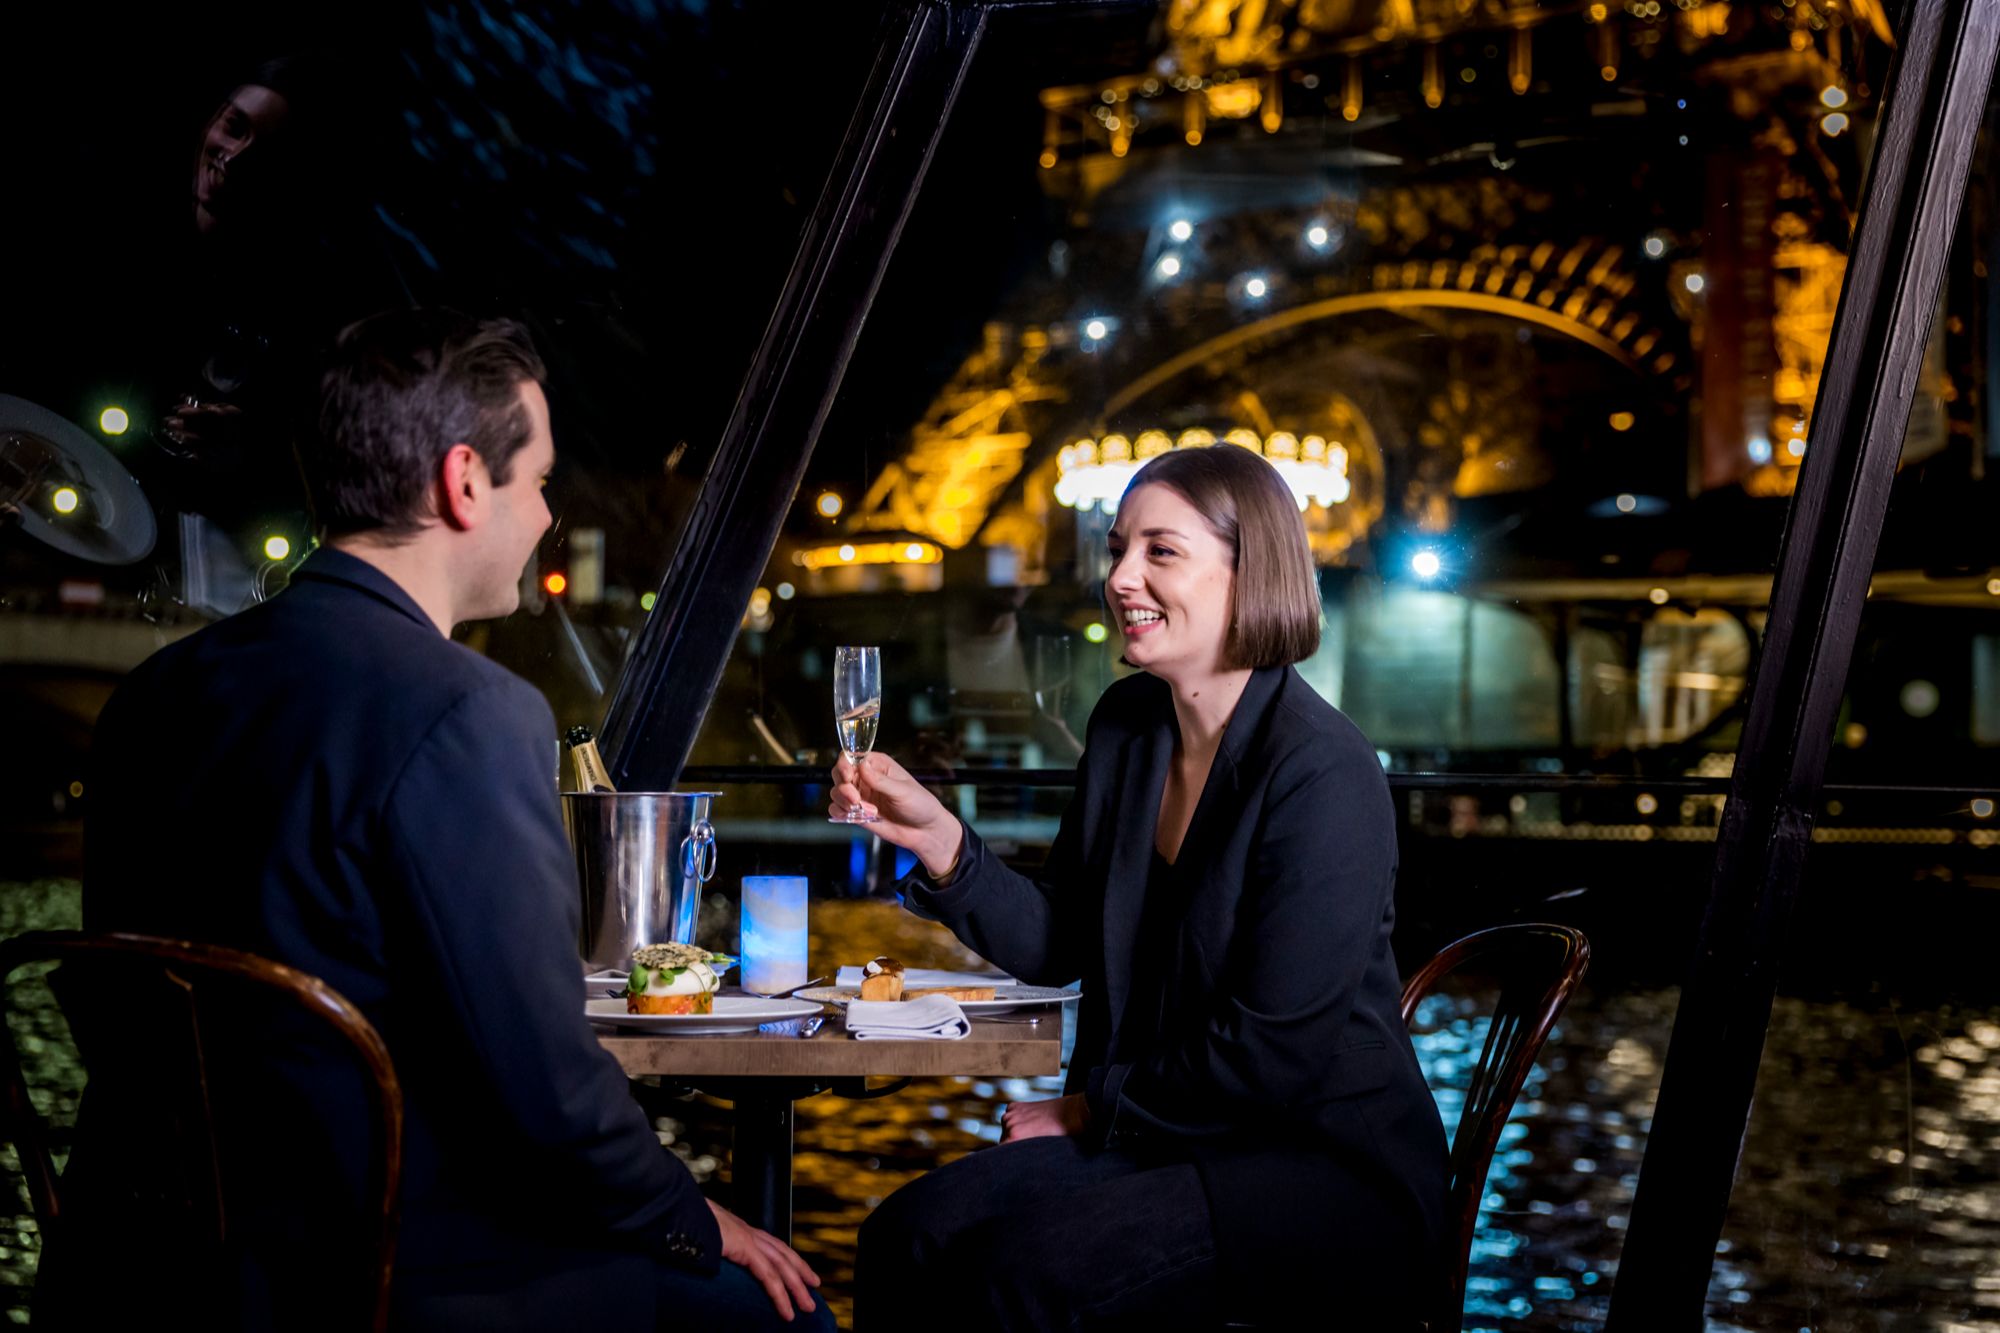 Seine River Dinner Cruise 9 PM